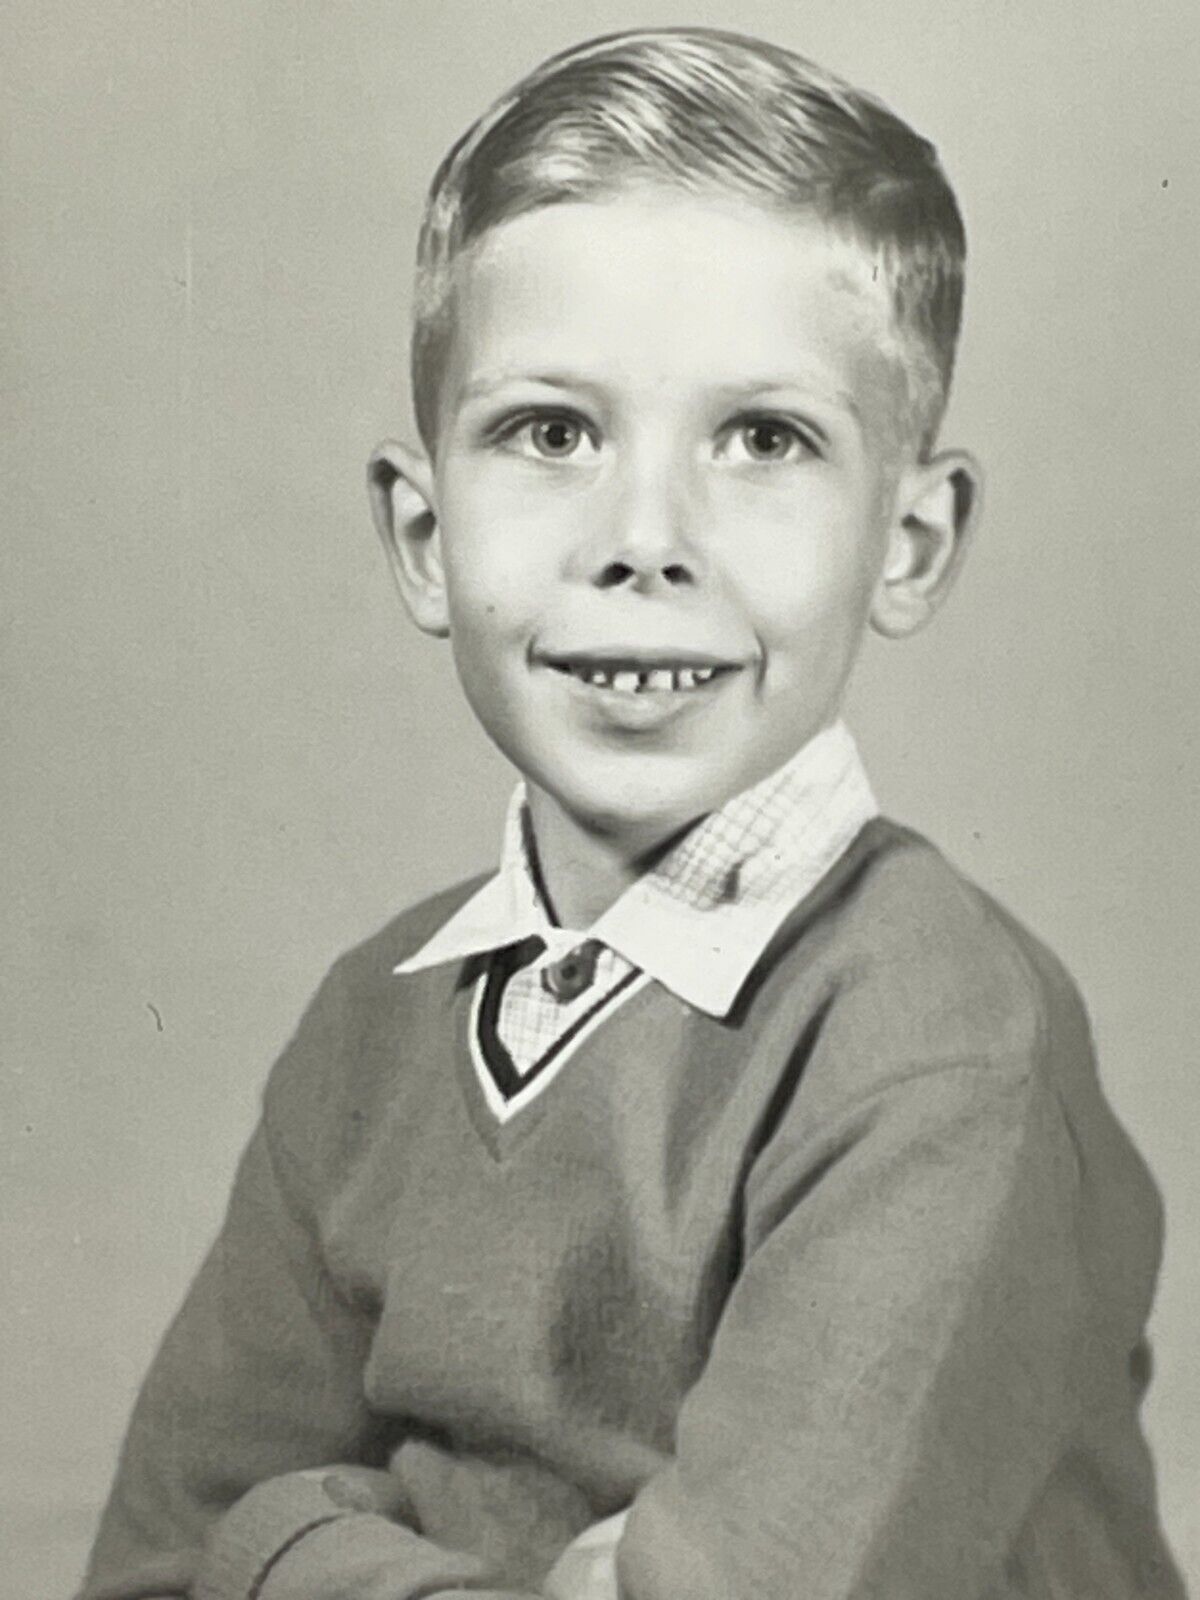 ZJ Photograph Boy Class School Portrait 1950-60's